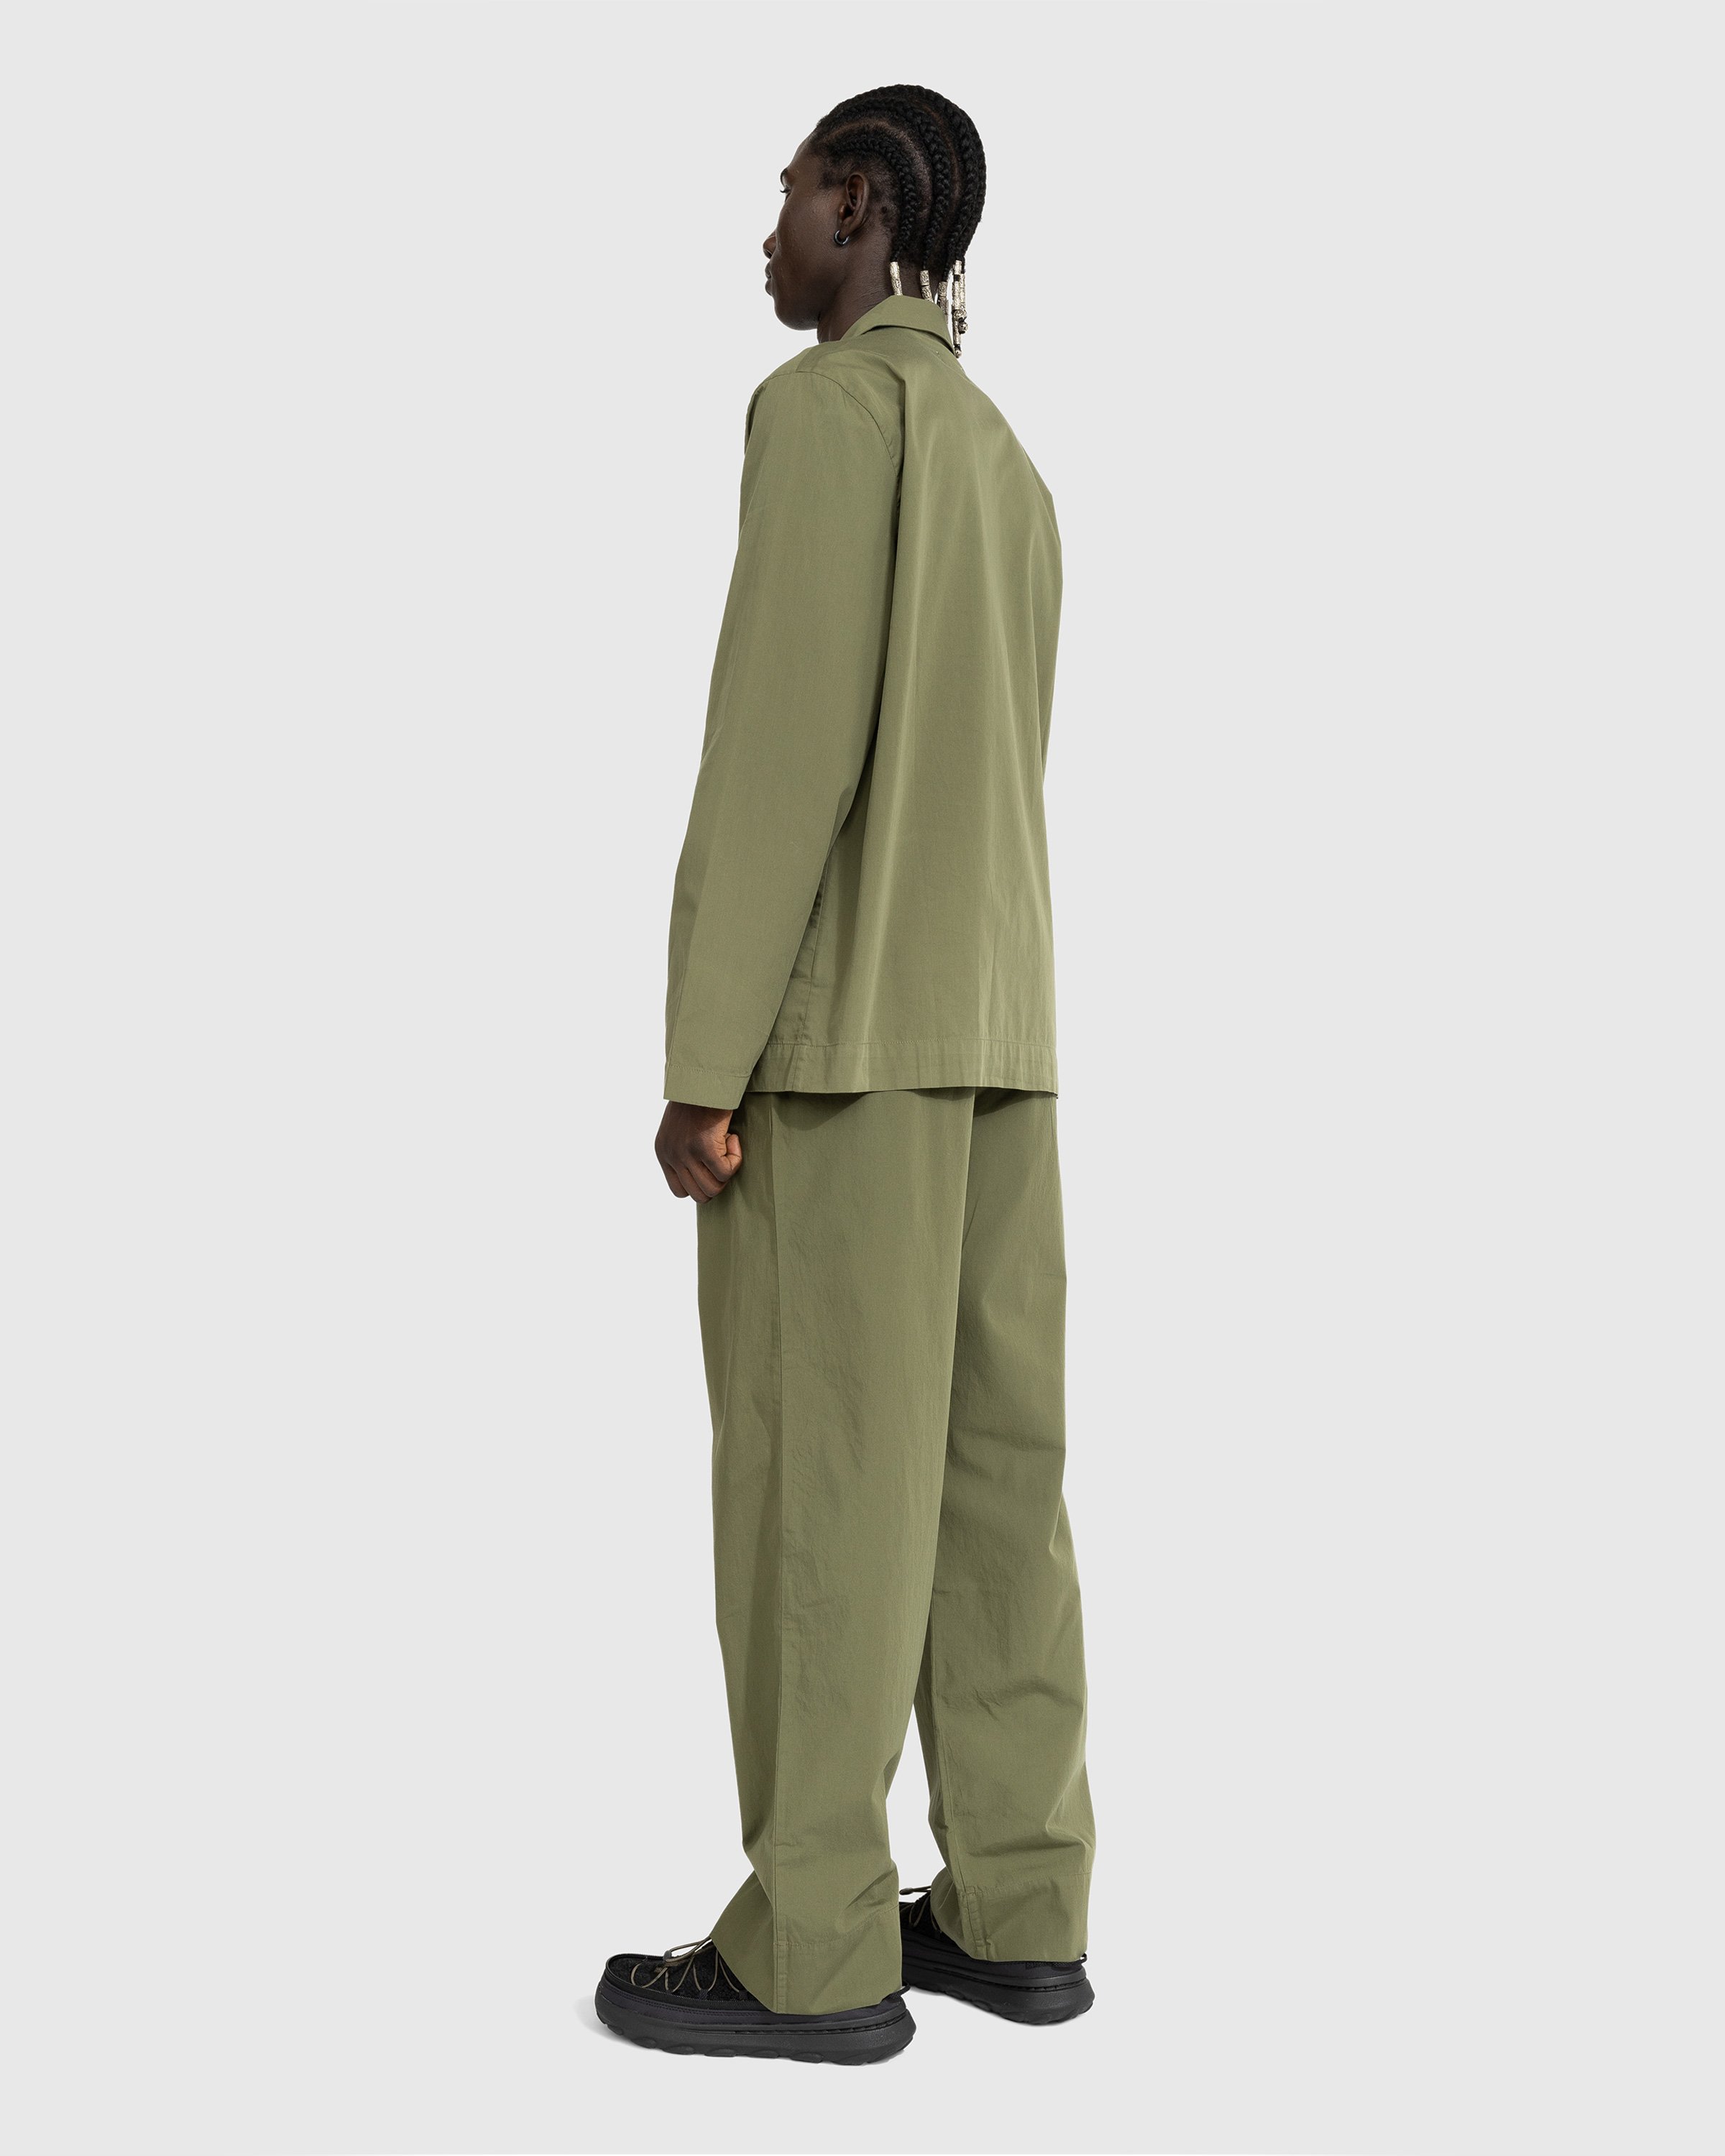 Tekla - Cotton Poplin Pyjamas Pants Willow - Clothing - Green - Image 3